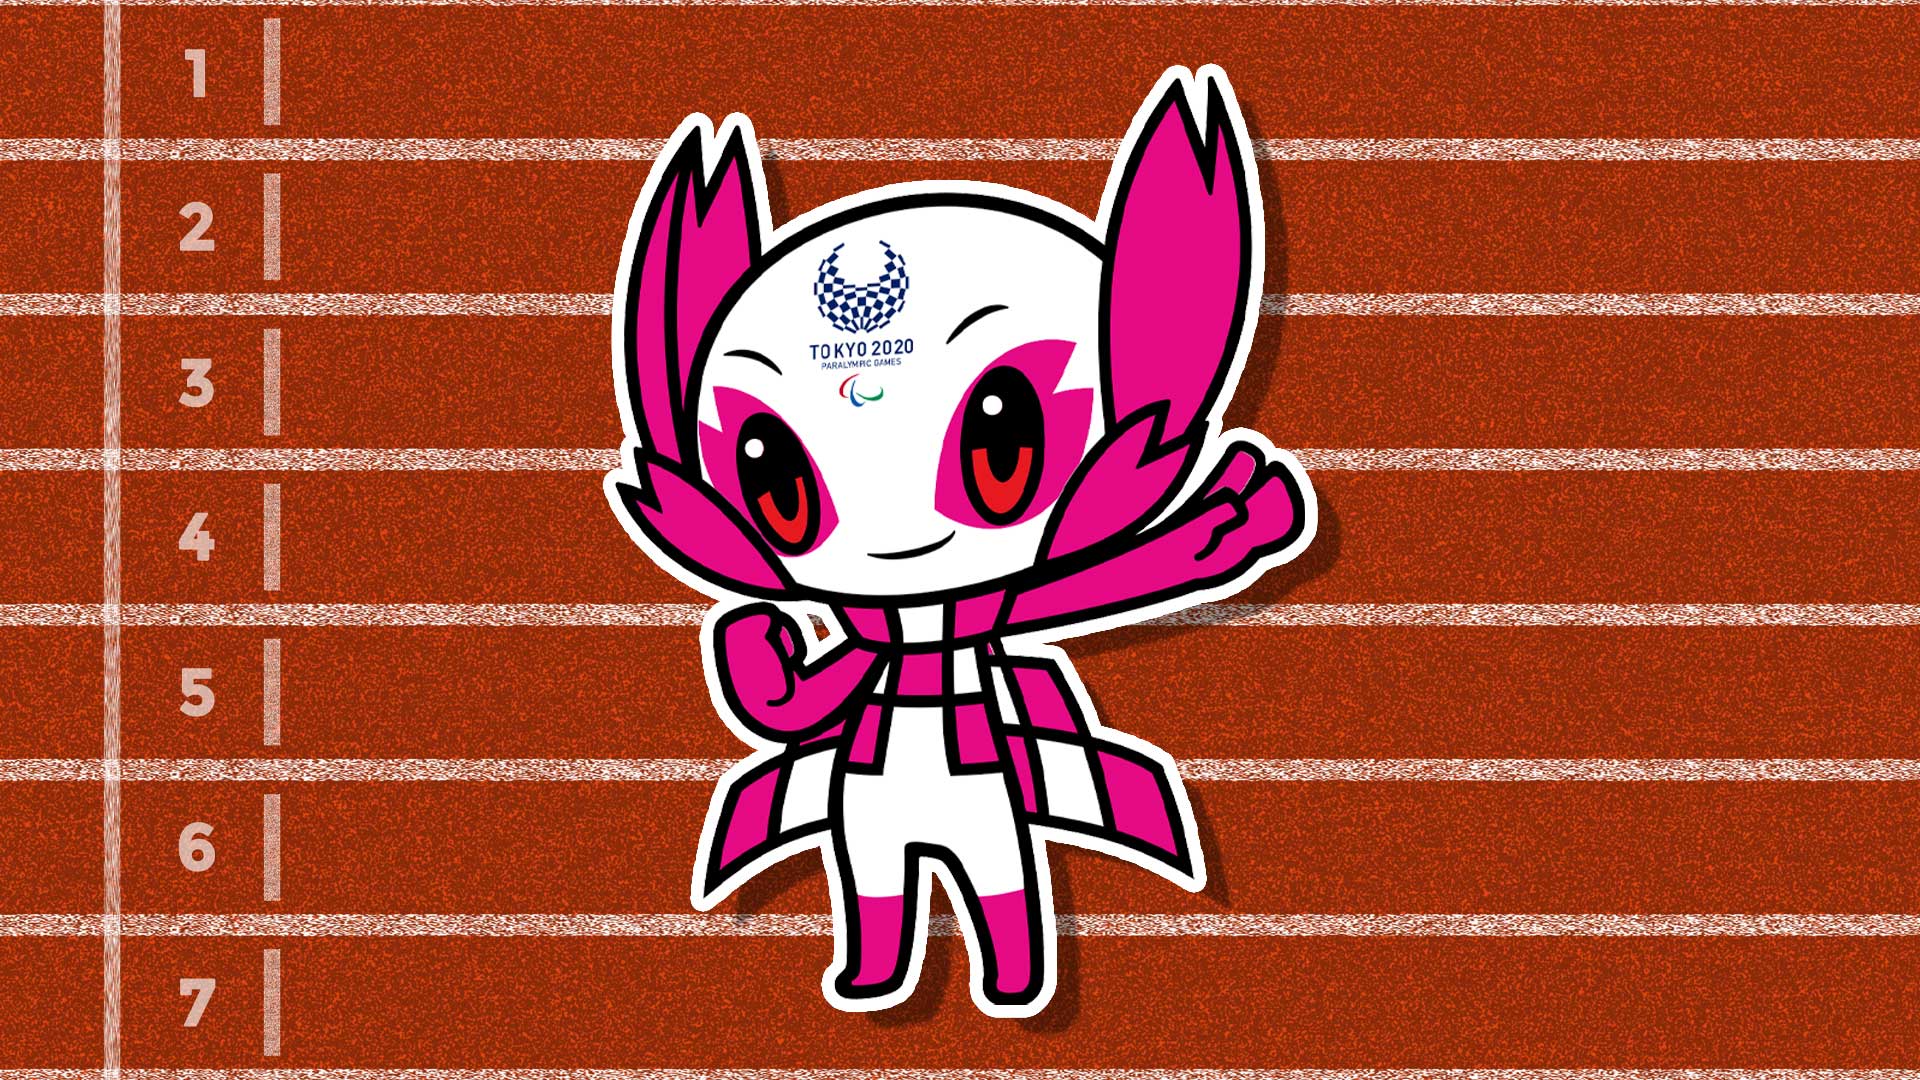 The Tokyo 2020 Paralympics mascot